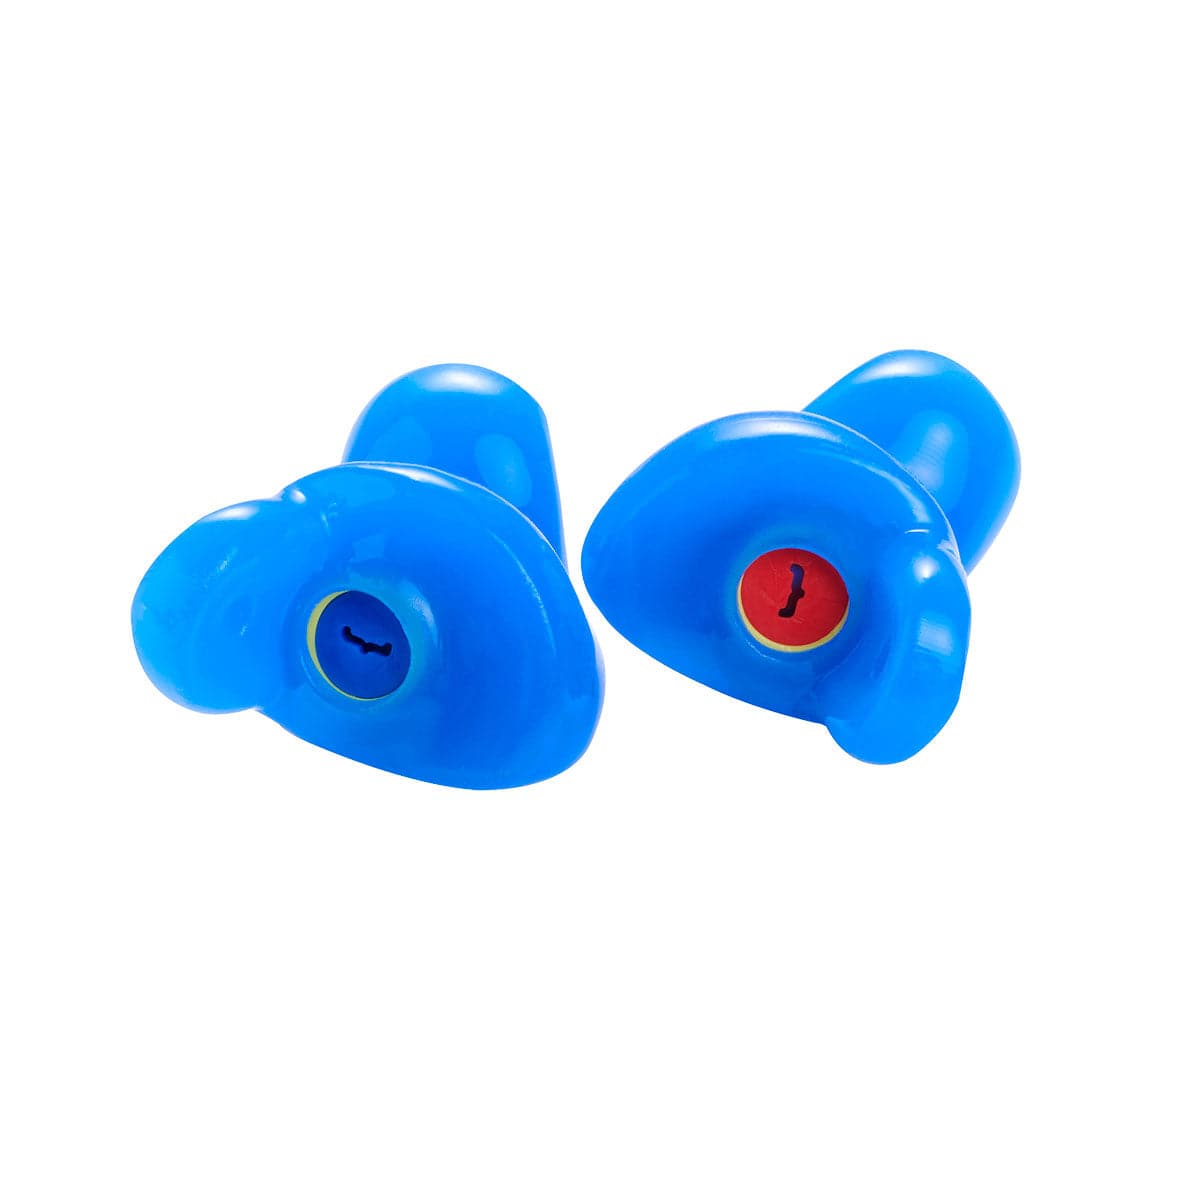 Elacin RC NG Fully Detectable Custom Ear Plugs - Hearsafe Australia